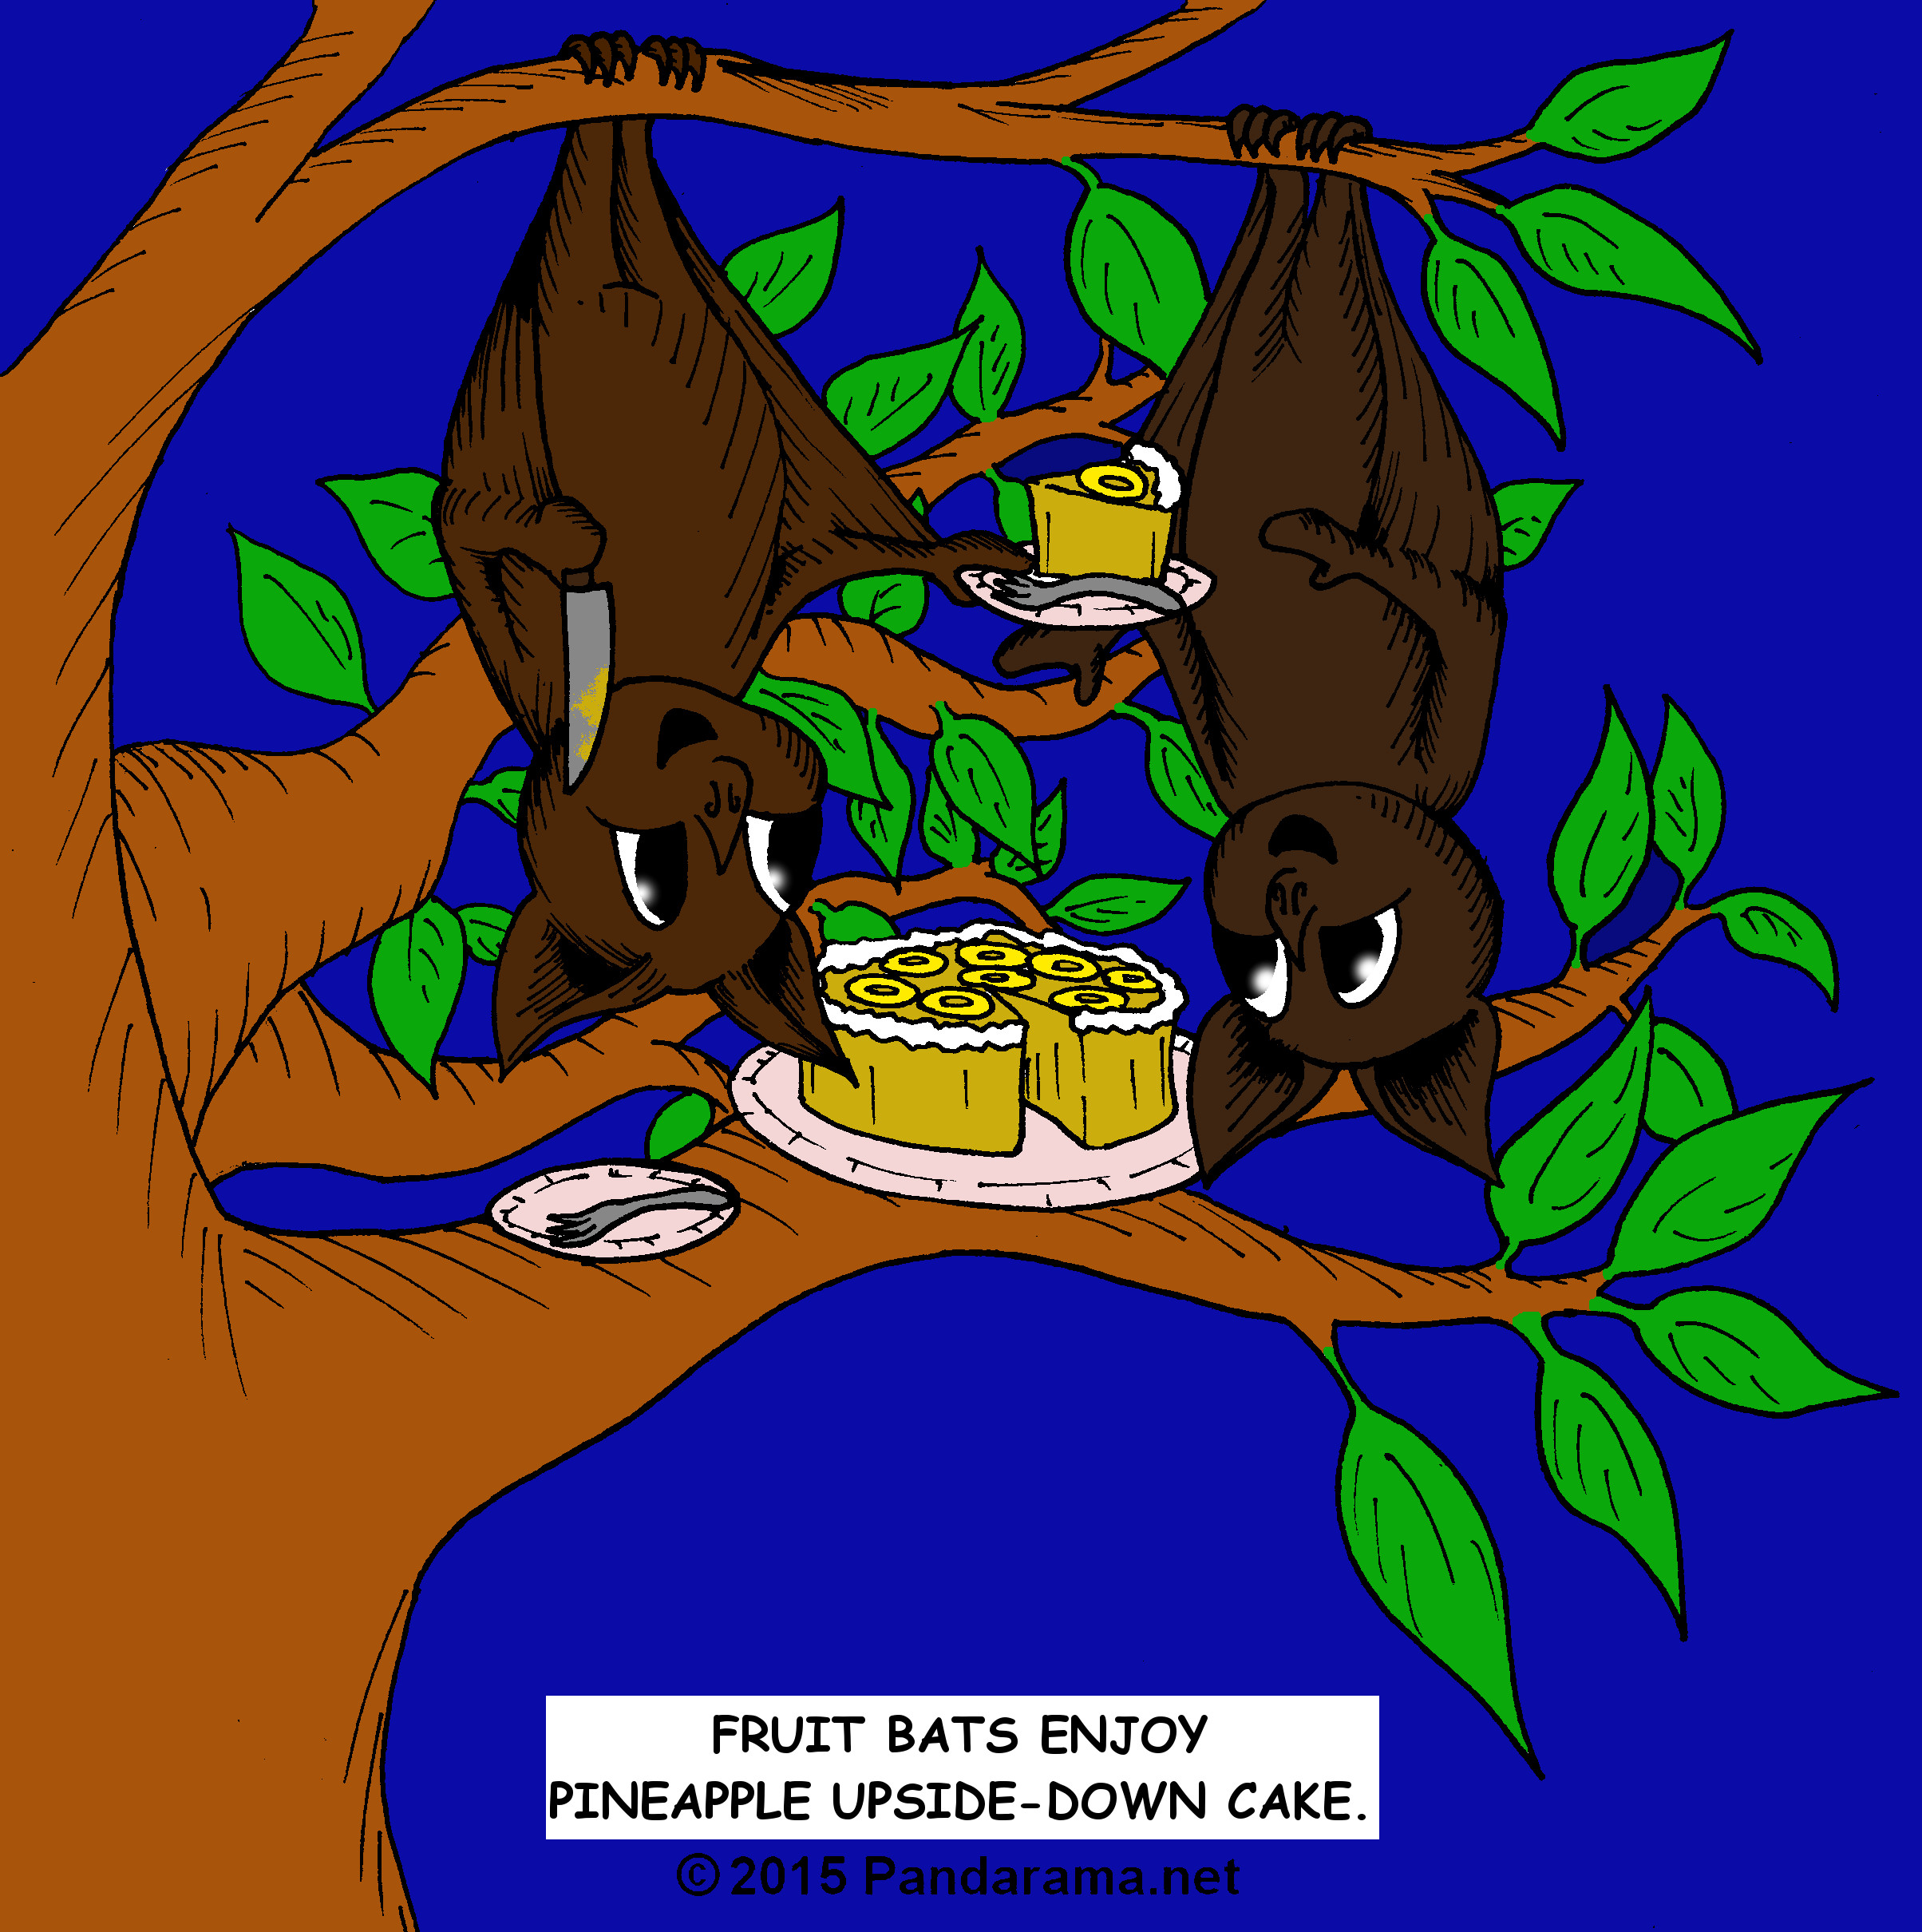 Pandarama / Pandarama.net cartoon of two fruit bats hanging upside down from a tree eating pineapple upside down cake.